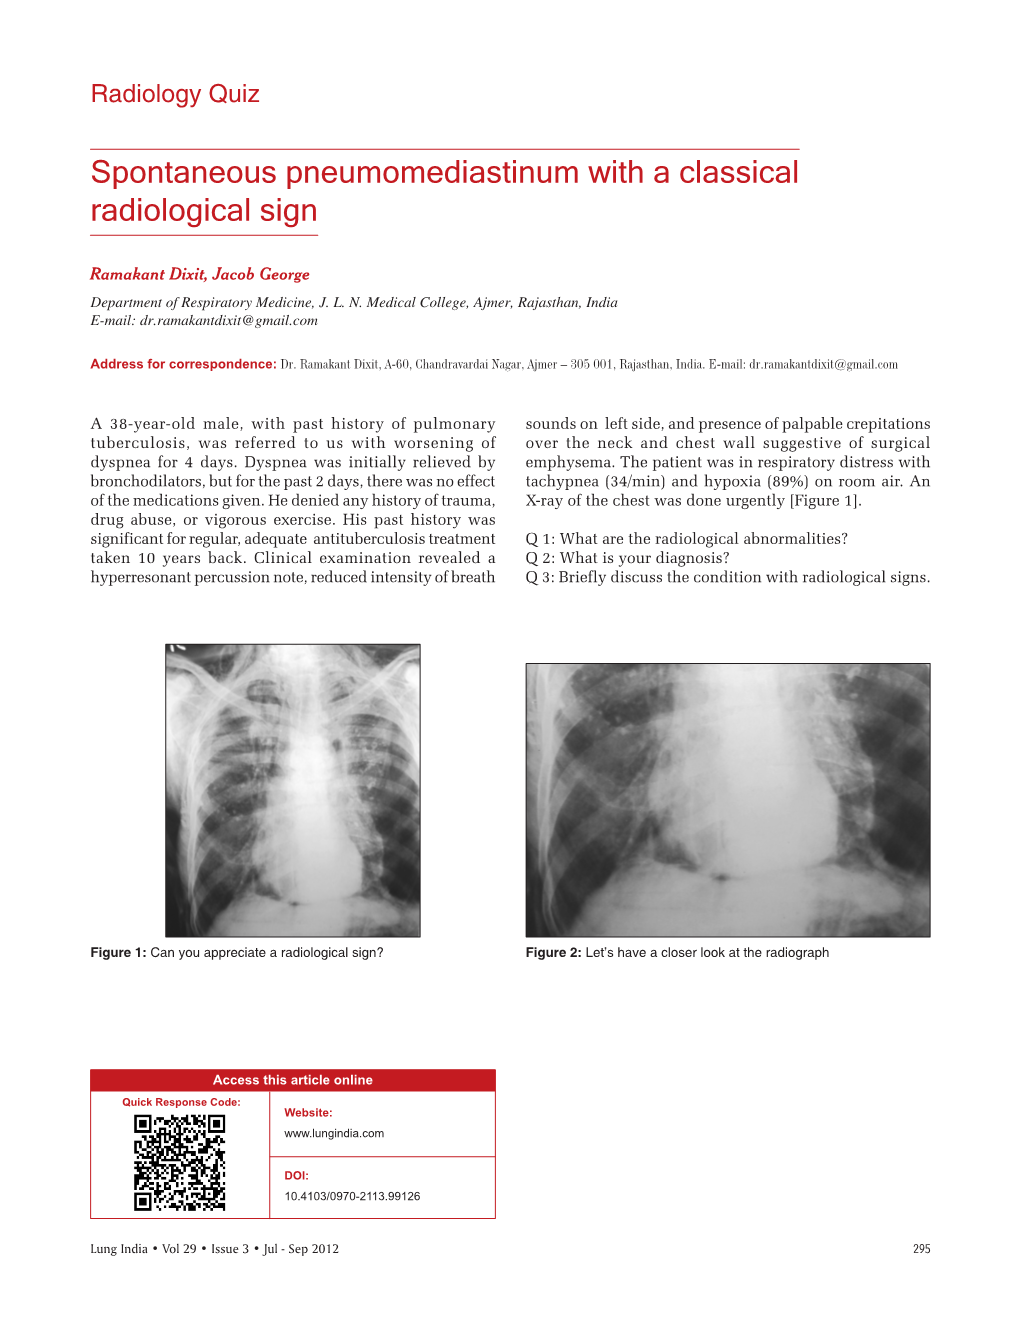 Spontaneous Pneumomediastinum with a Classical Radiological Sign